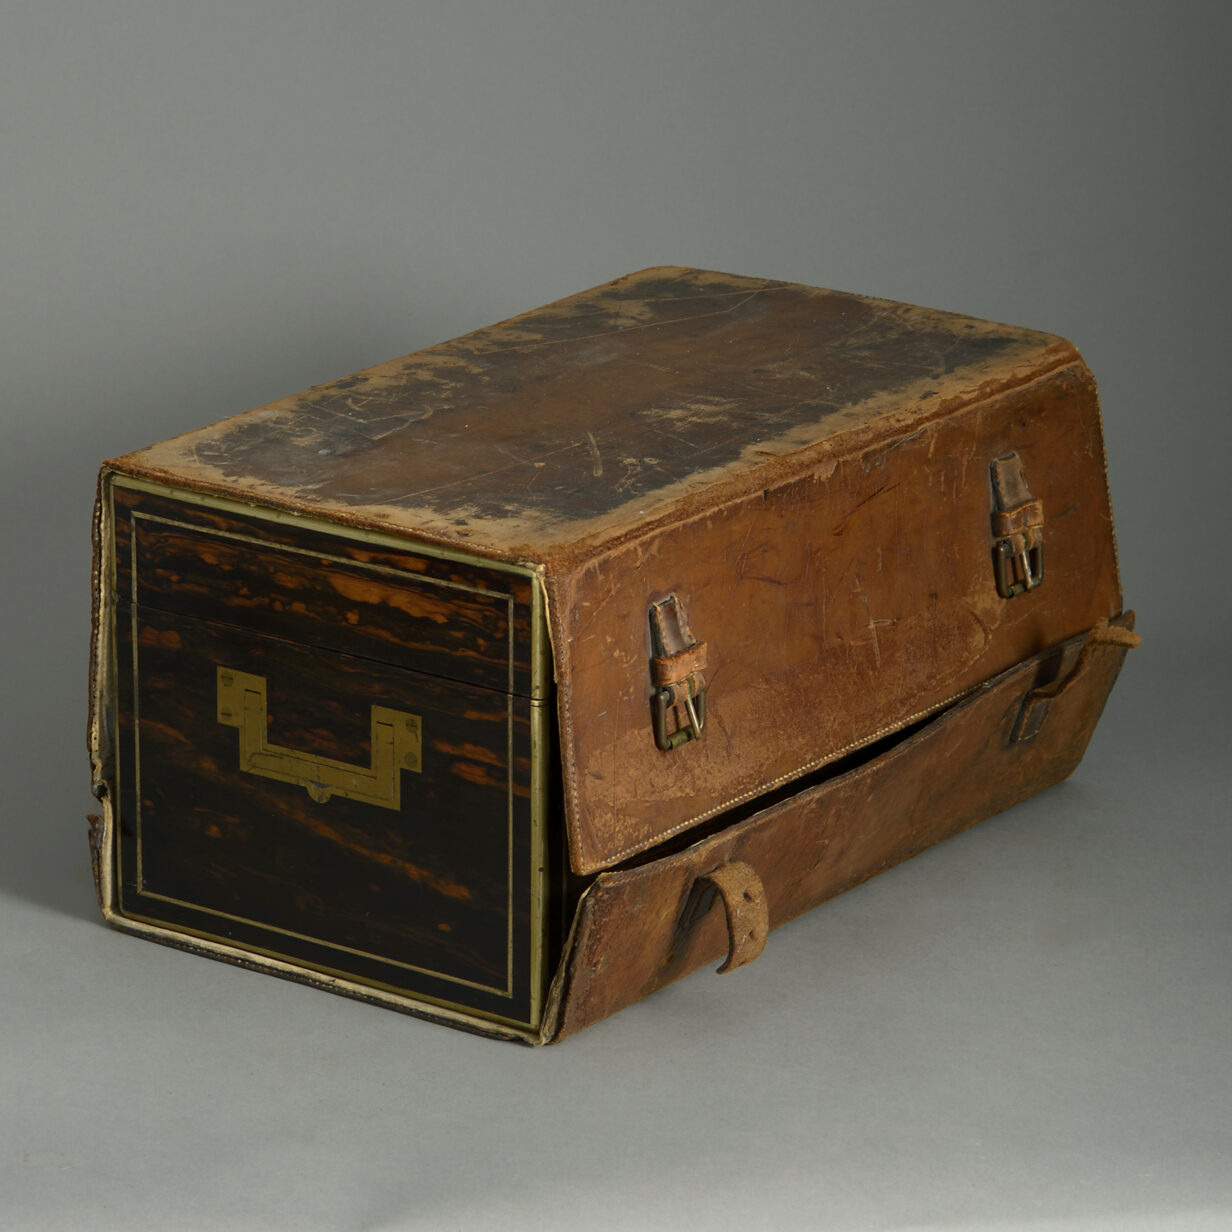 Leuchars box